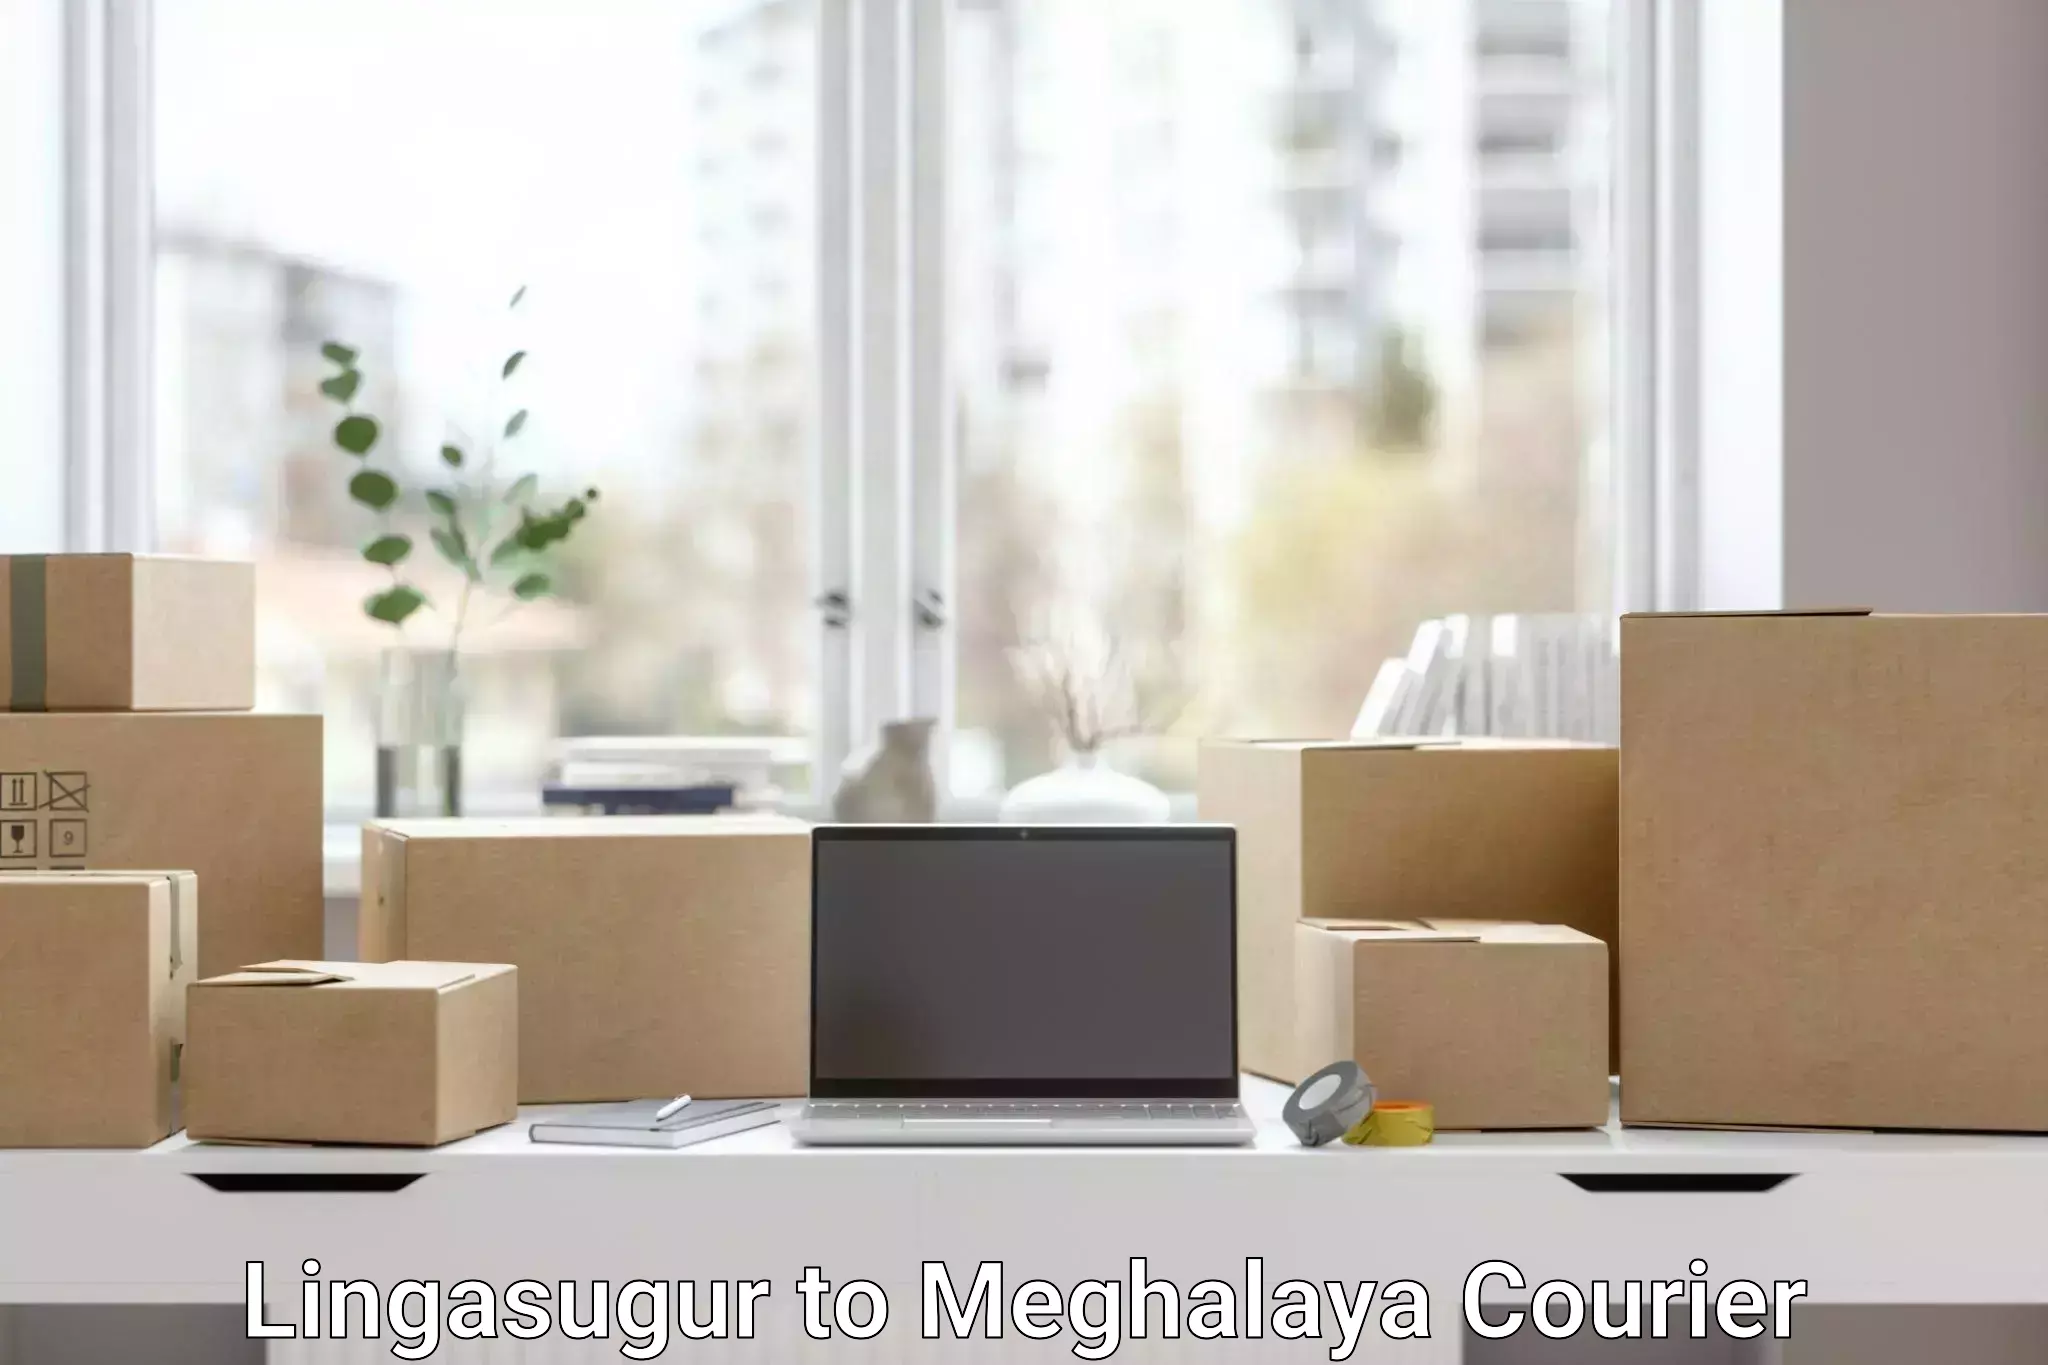 Next-day delivery options Lingasugur to Meghalaya